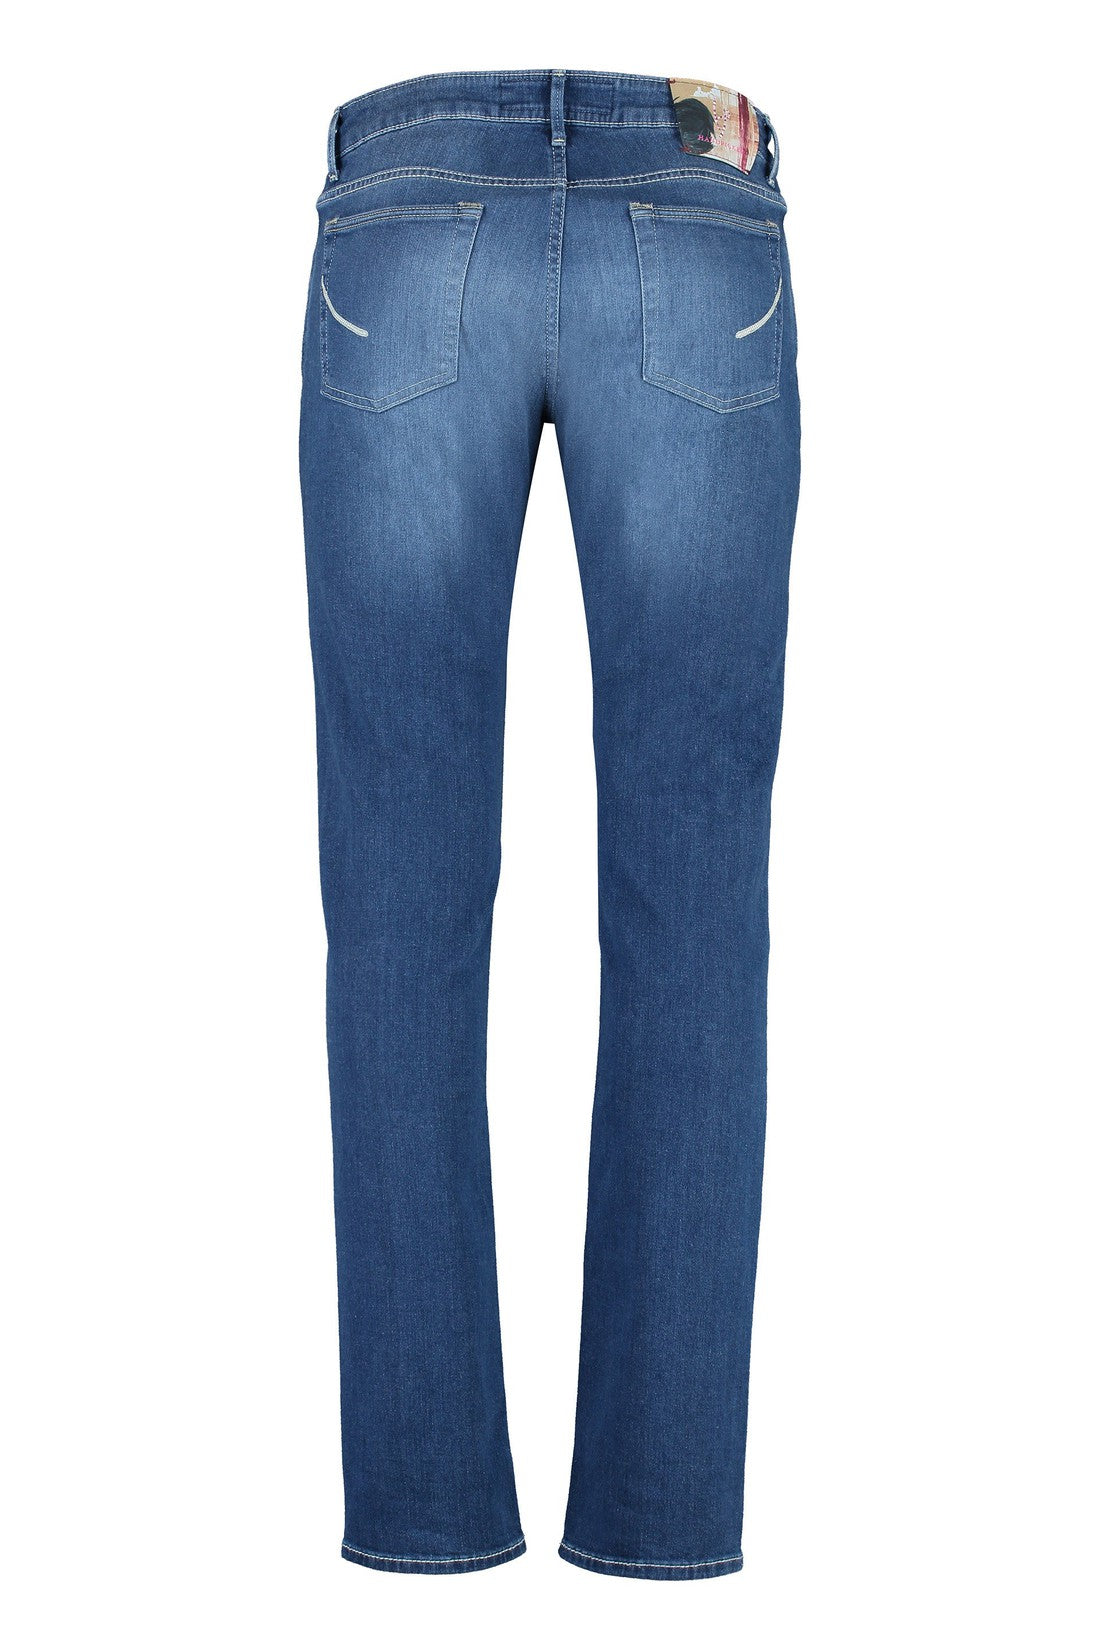 HANDPICKED-OUTLET-SALE-5-pocket straight-leg jeans-ARCHIVIST